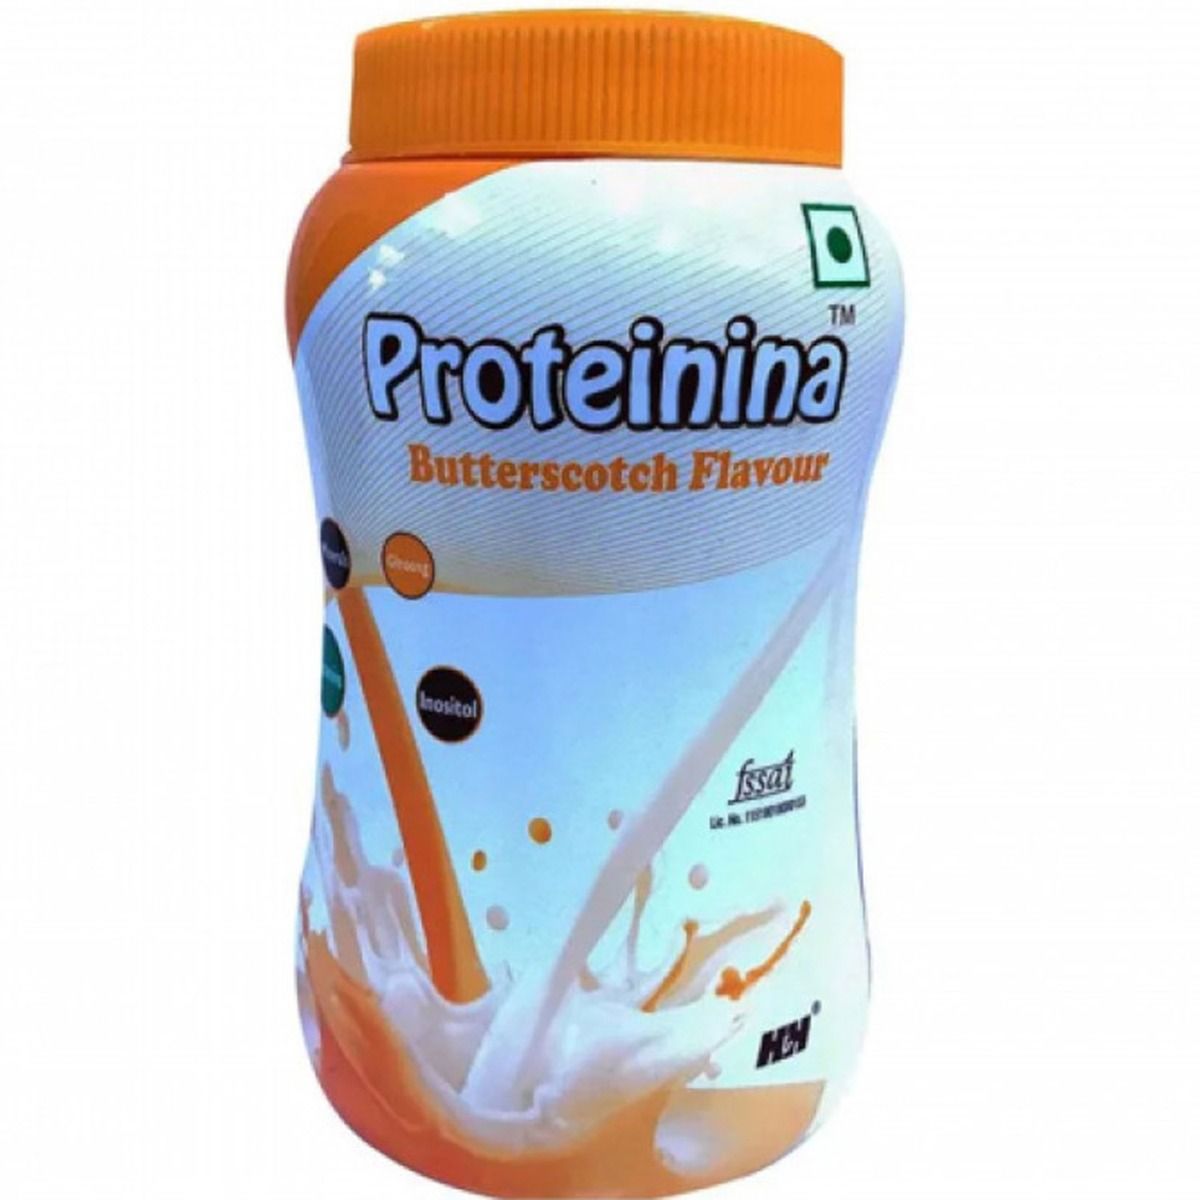 Proteinina Butterscotch Powder 200 gm, Pack of 1 